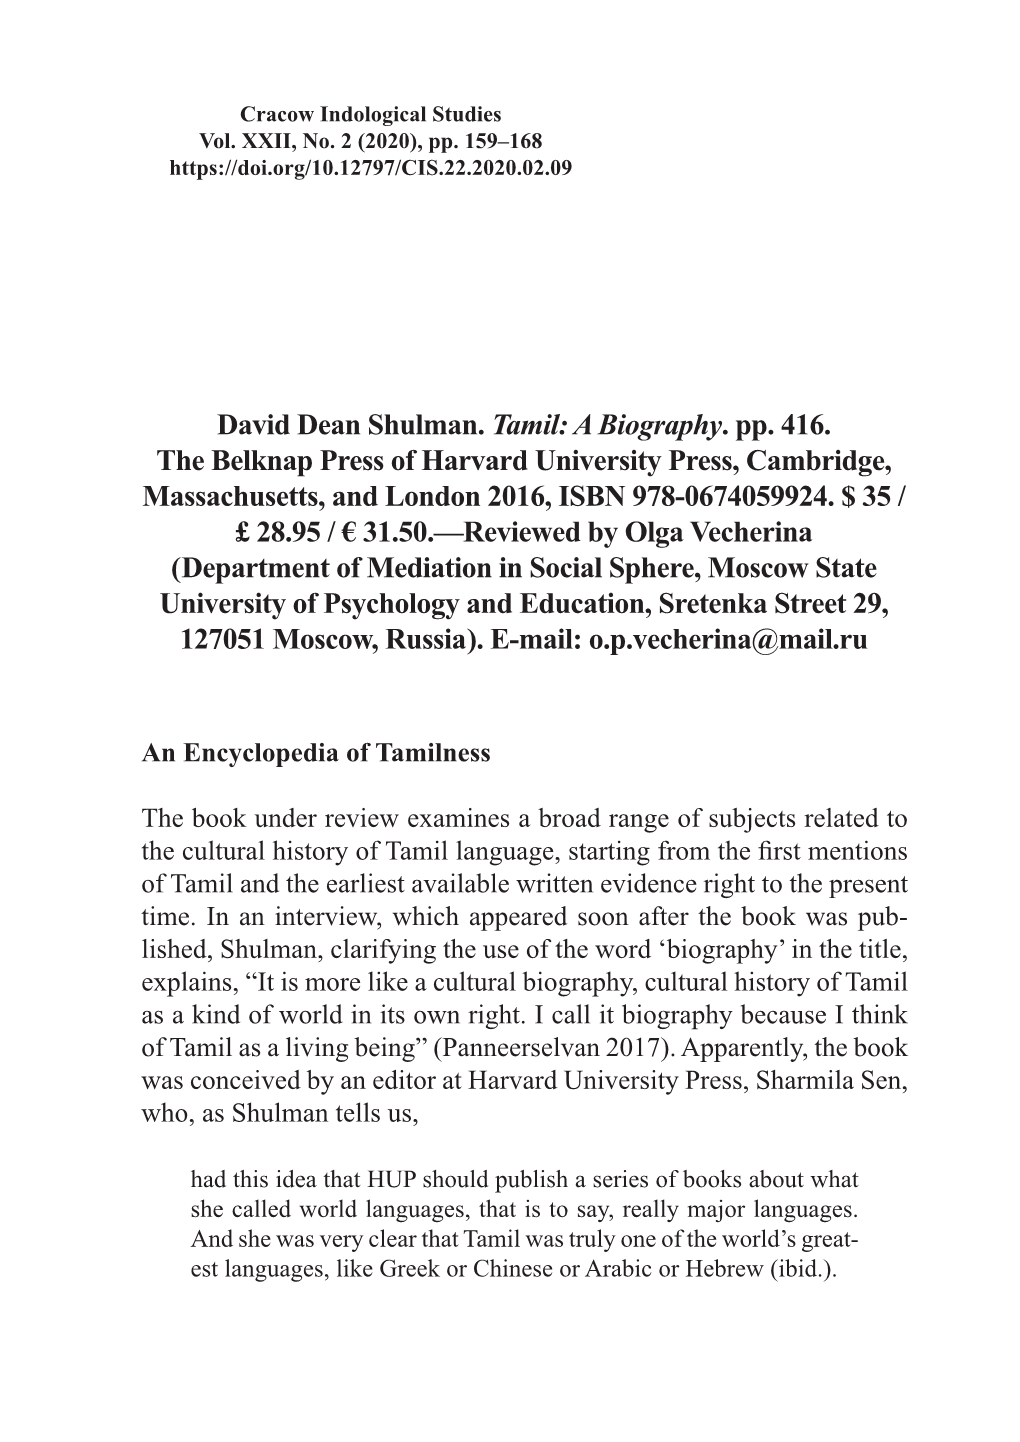 David Dean Shulman. Tamil: a Biography. Pp. 416. the Belknap Press of Harvard University Press, Cambridge,­ Massachusetts, and London 2016, ISBN 978-0674059924